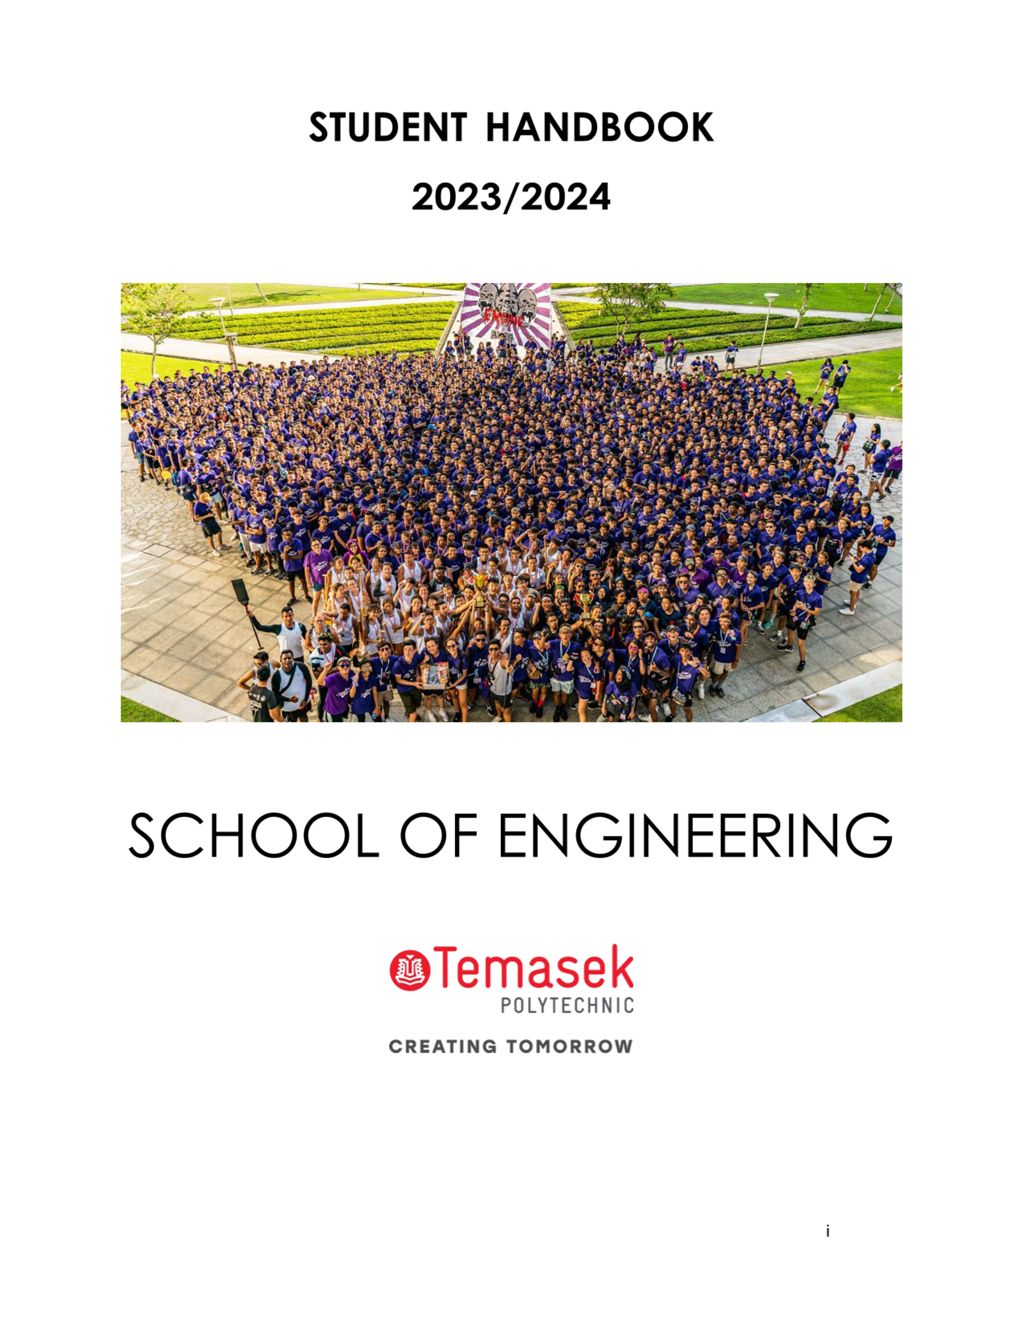 School of Engineering student handbook. 2023/2024